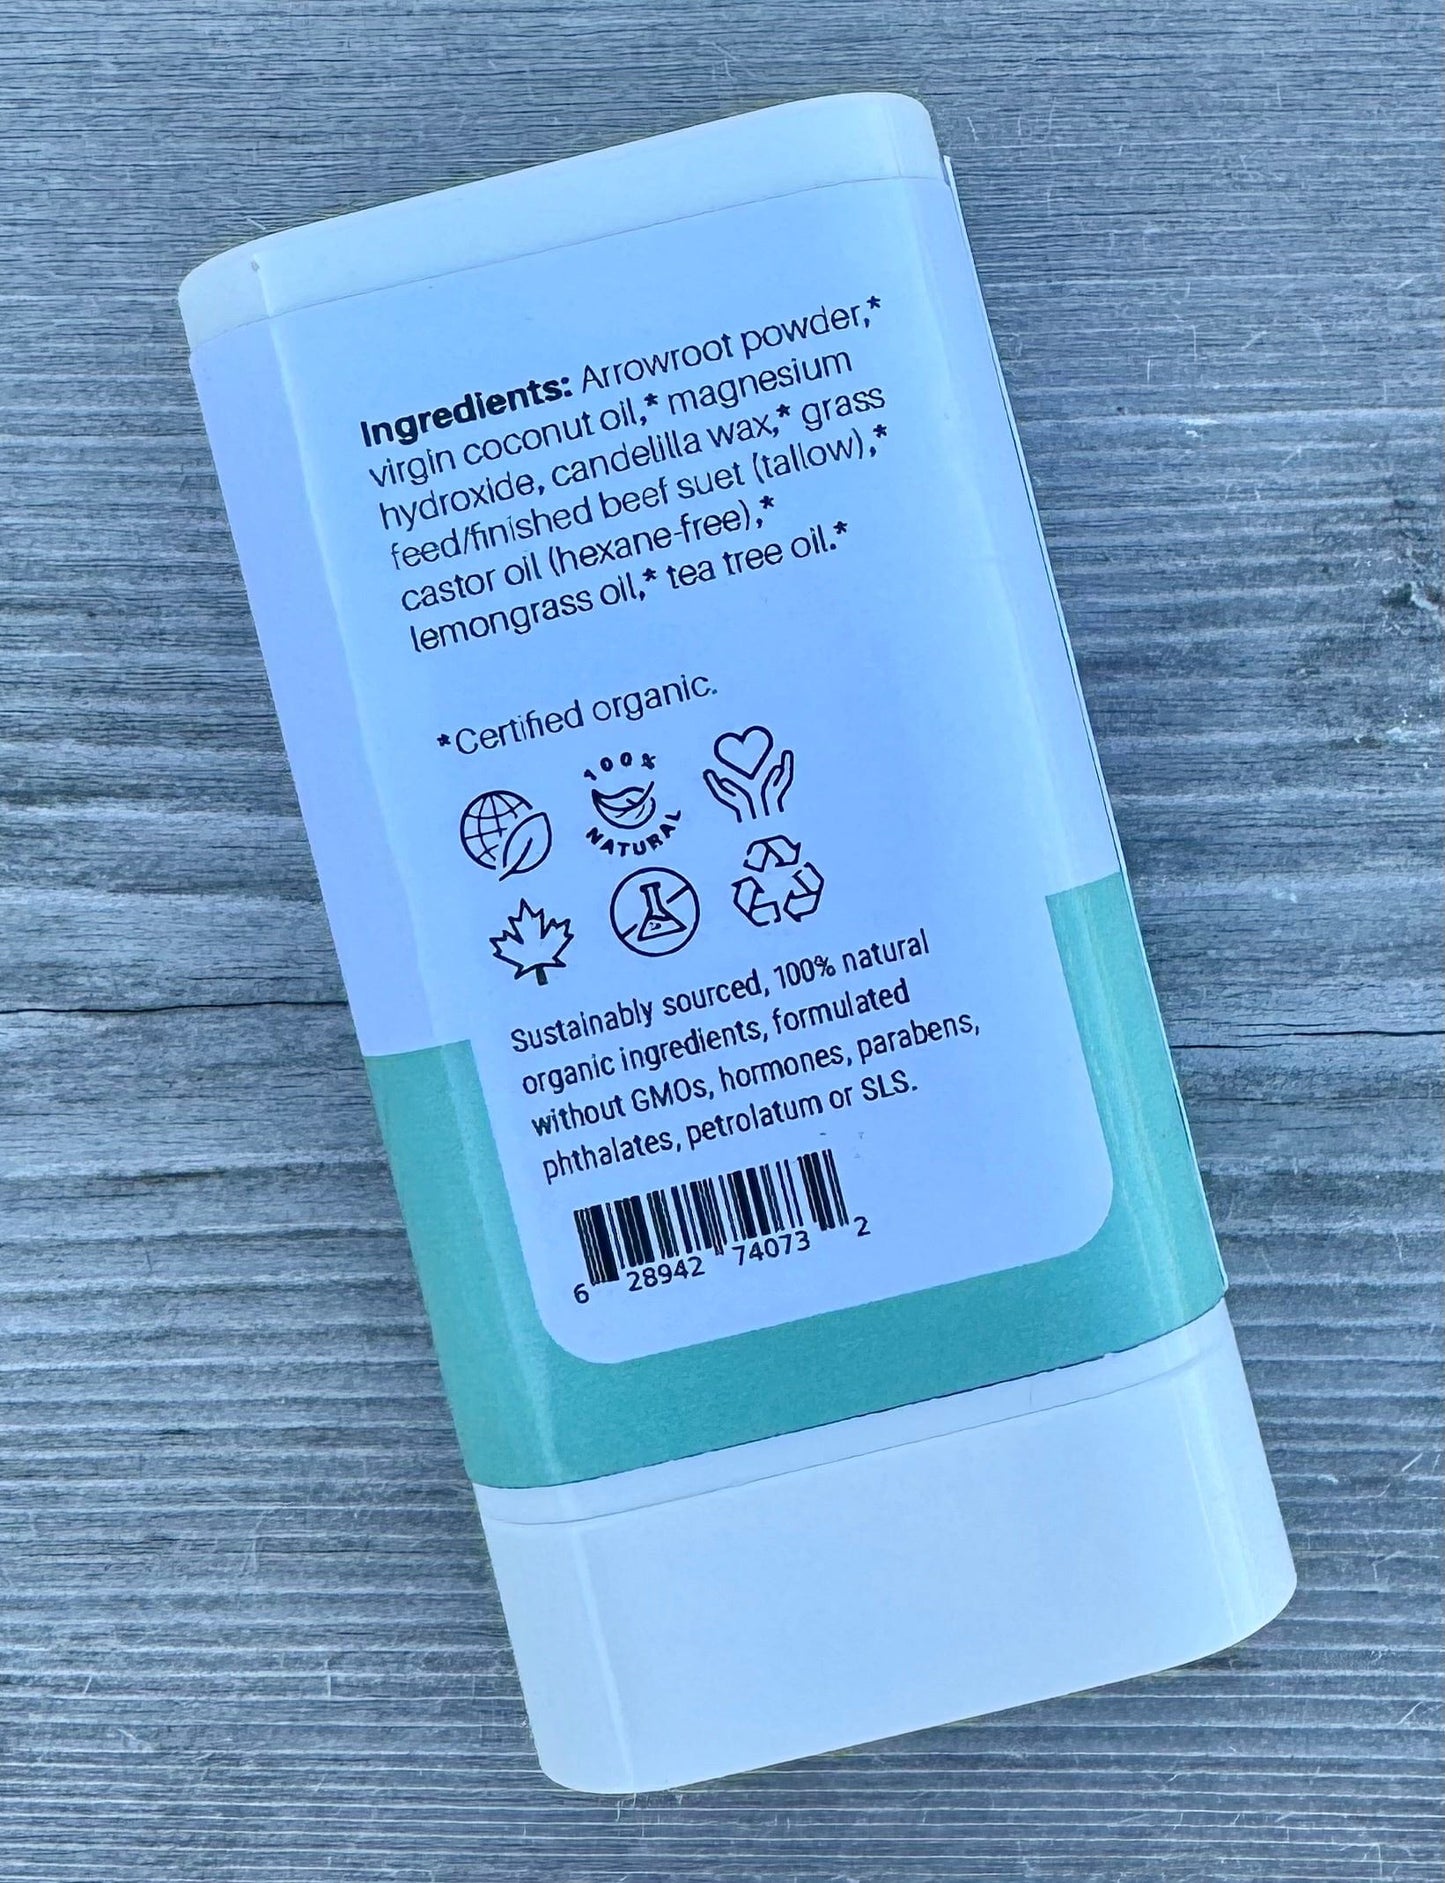 Travel Size Lemongrass Tallow Deodorant, All Day Protection, 20ml, Sensitive Skin